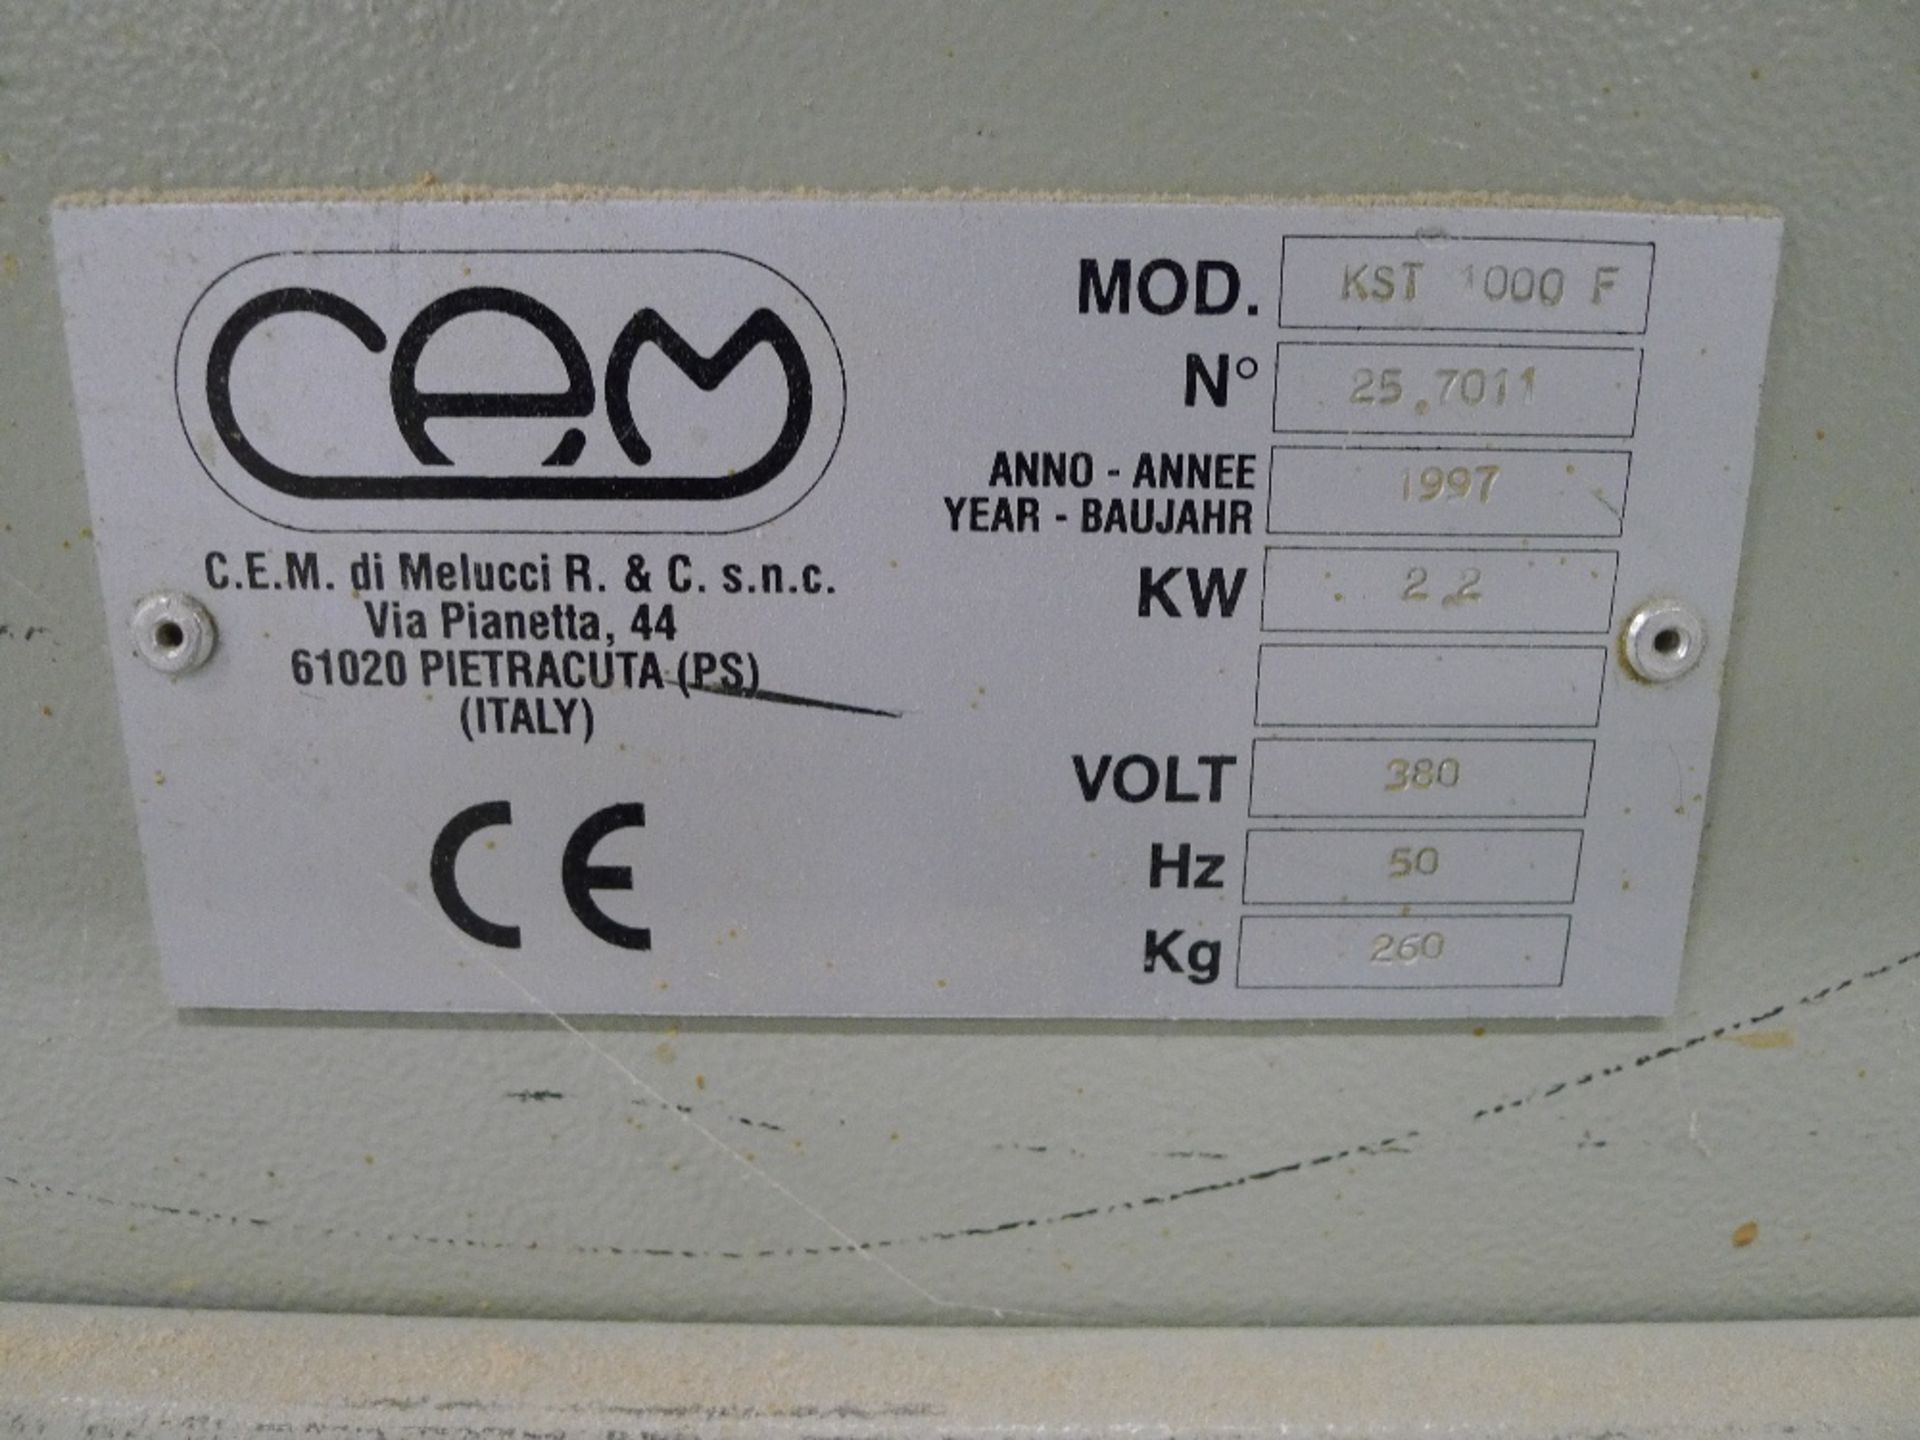 1 longitudinal oscillating belt sander by CEM type KST 1000F, s/n 25.7011, YOM 1997, 3ph. Please - Image 2 of 3